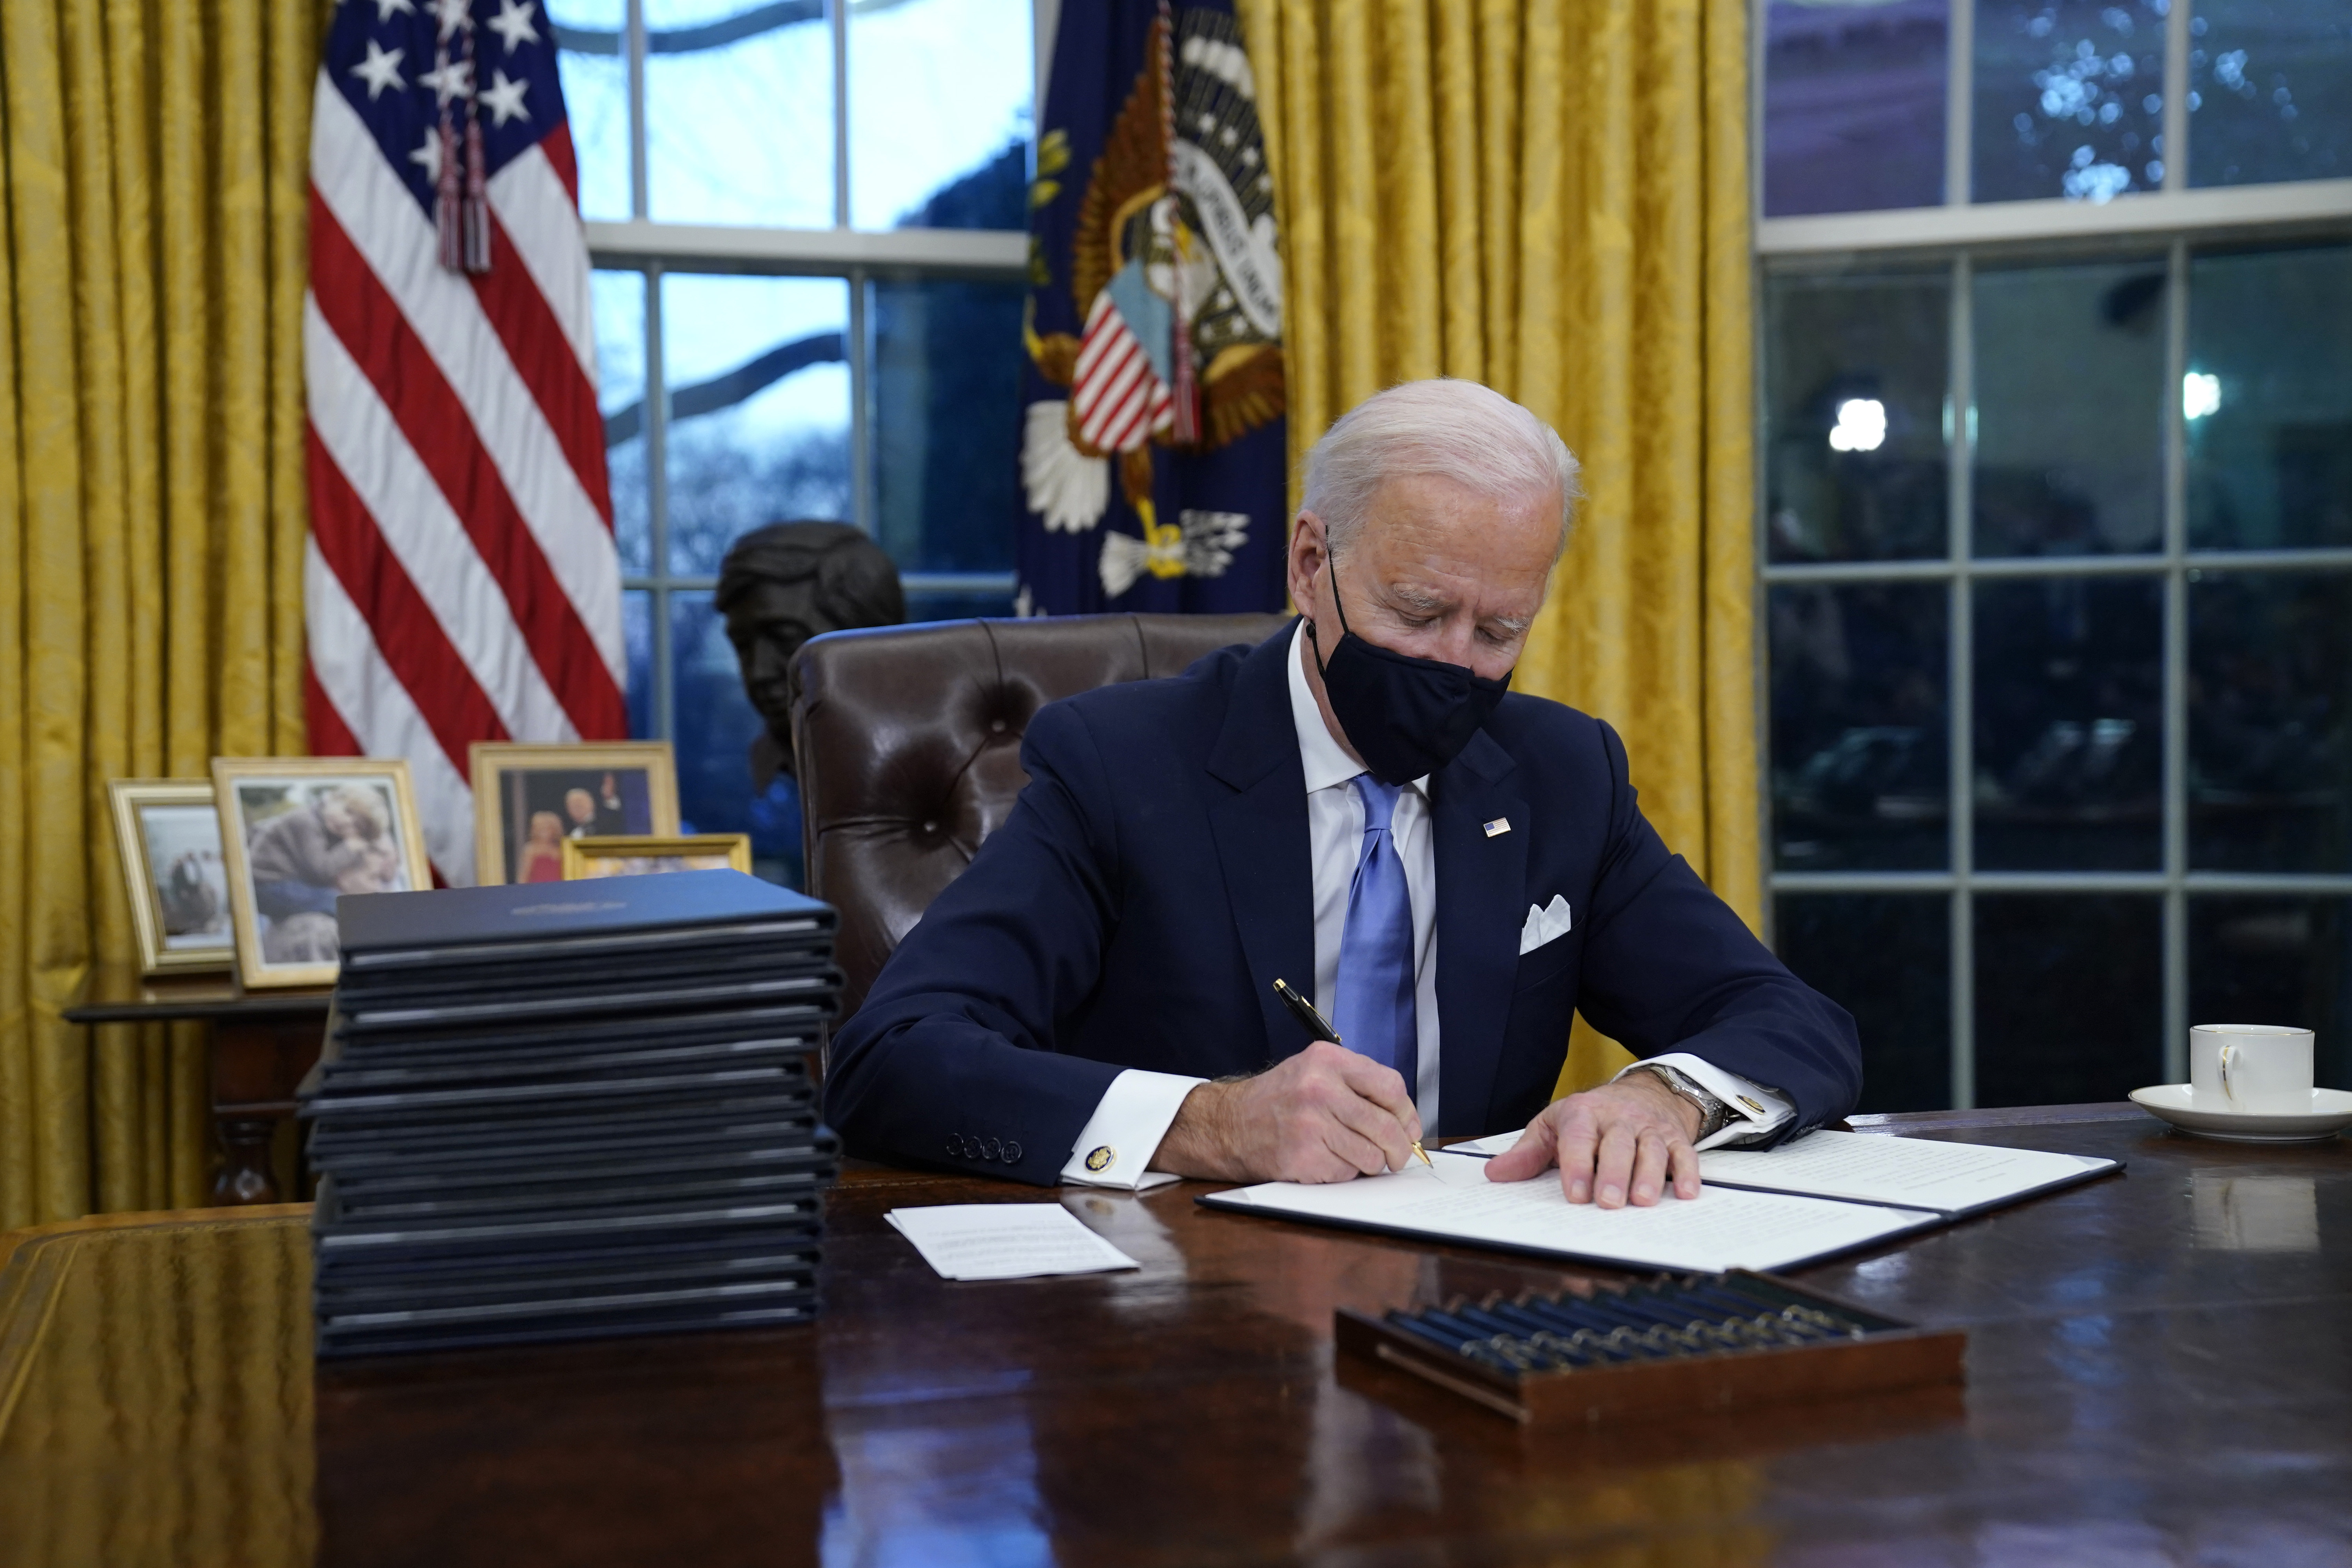 President Biden signs executive orders